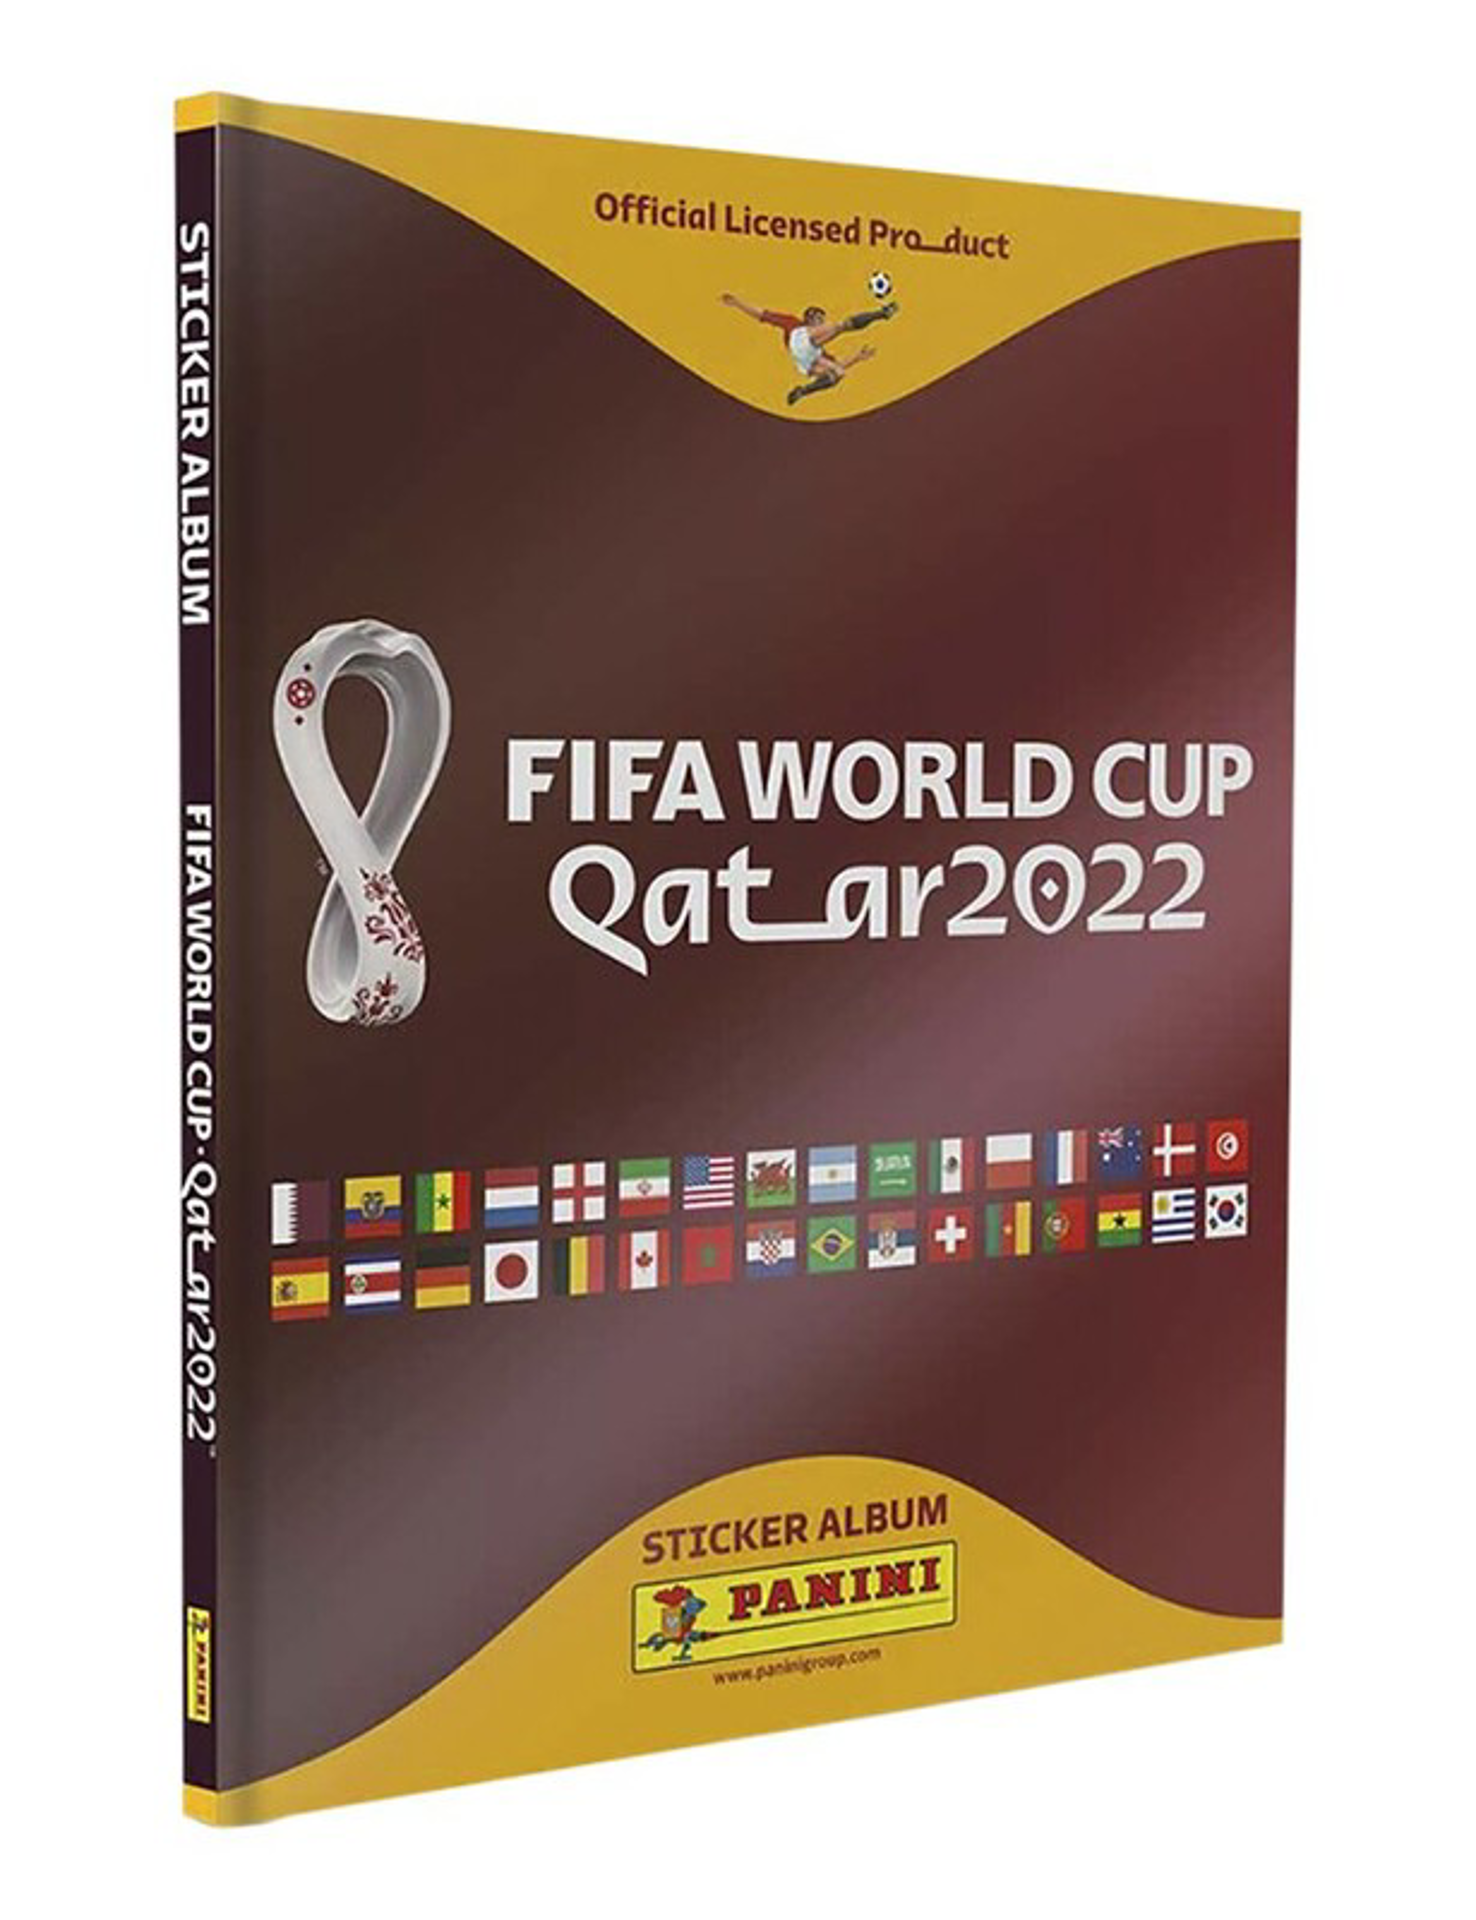 Panini - Album Deluxe FIFA World Cup Qatar 2022 (Hard Cover)